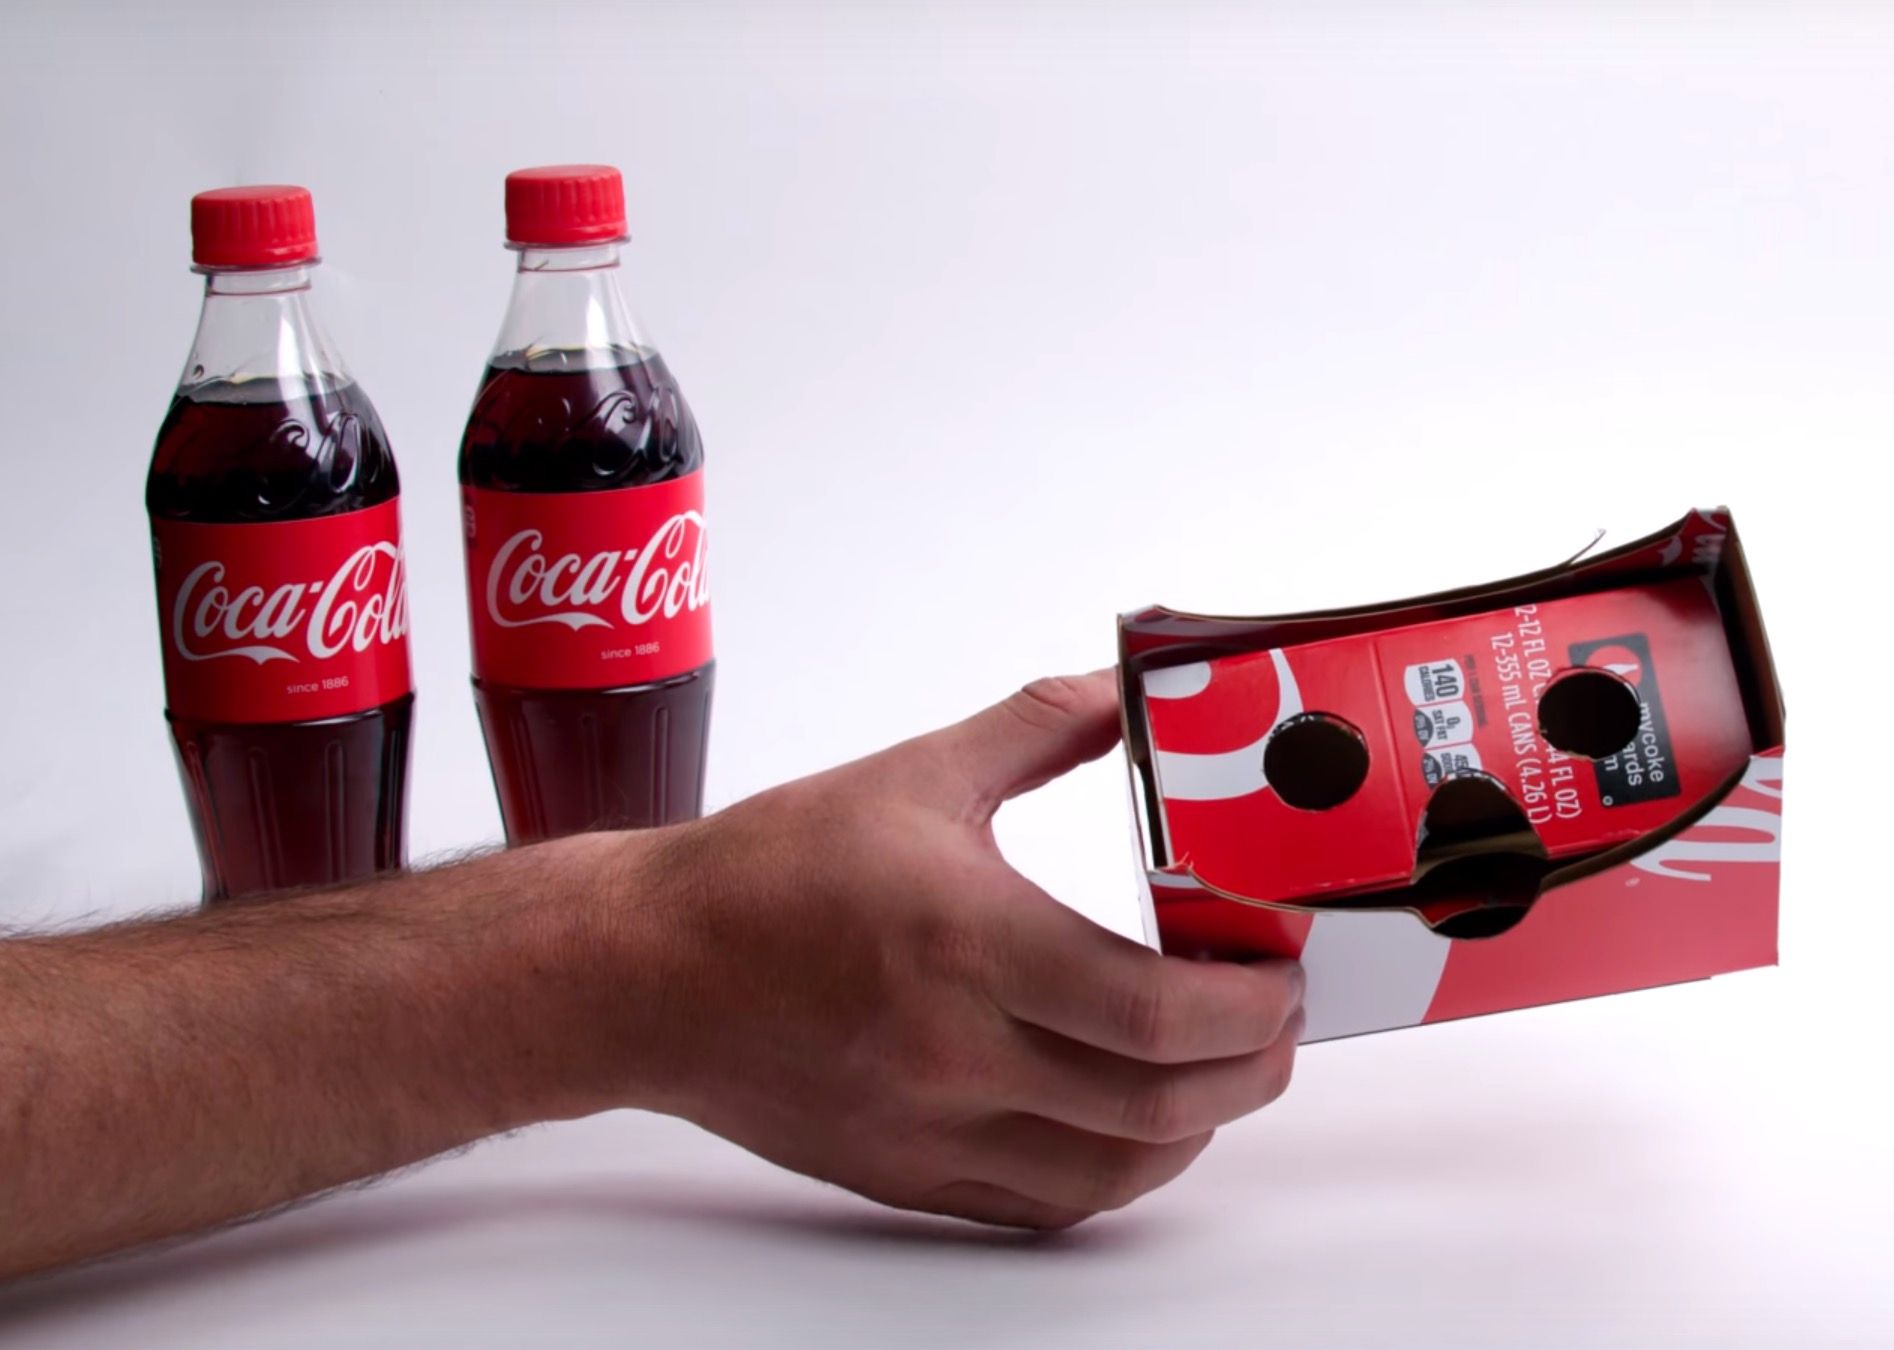 coca cola turned coke packs into google cardboard like vr viewers image 1